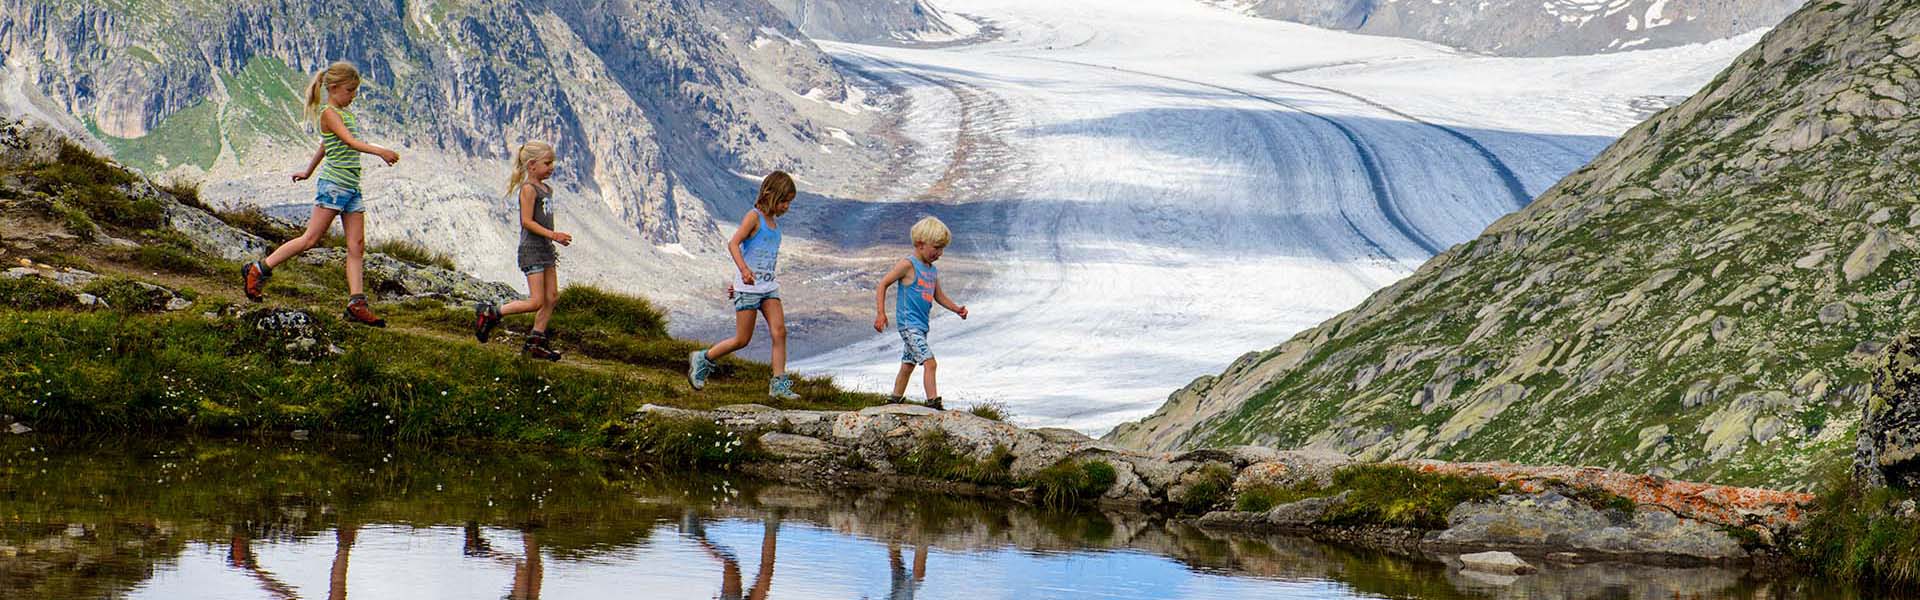 Wandelende kinderen met in achtergrond de Aletsch Gletsjer.